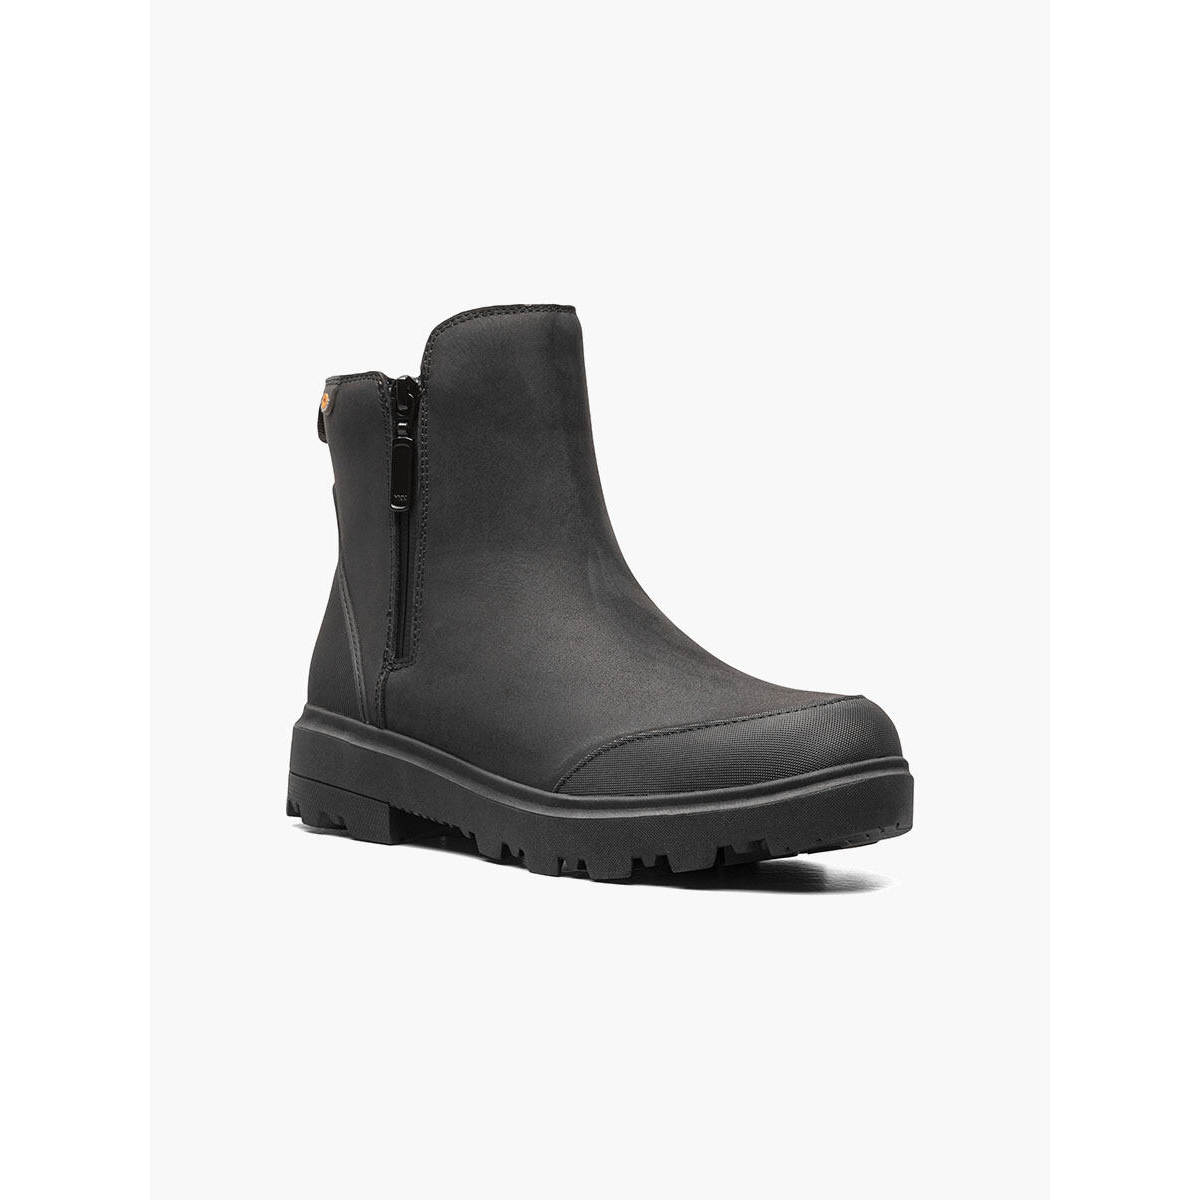 BOGS Women's Holly Zip Leather Waterproof Rain Boot Black - 72840-001 BLACK - BLACK, 9